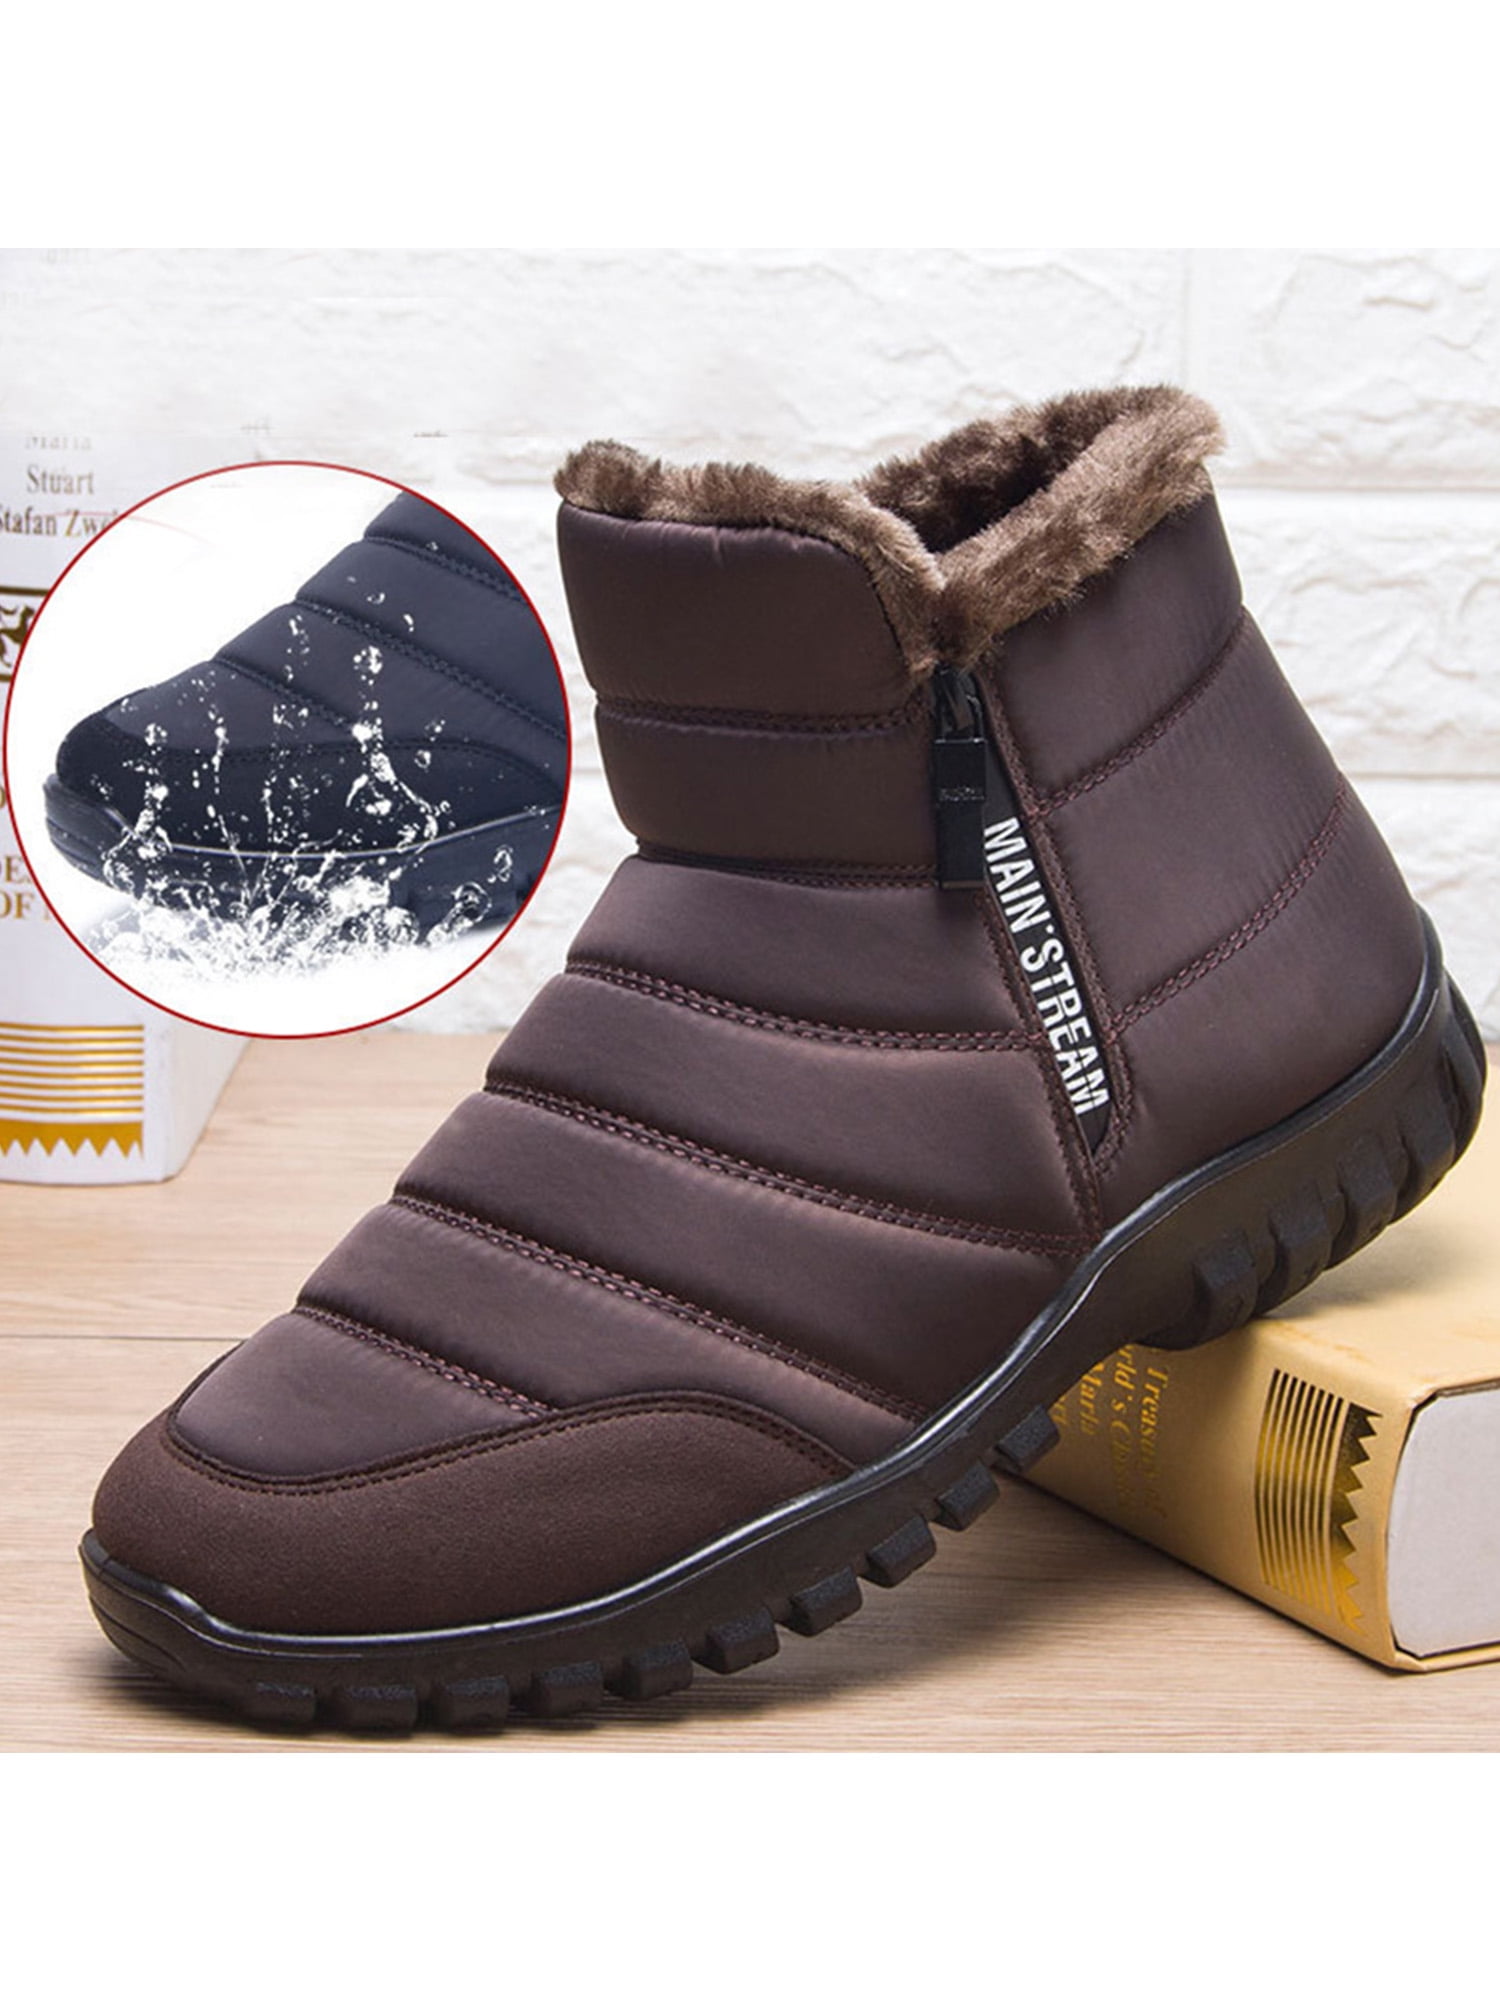 Retro Mens Ankle Boots Shoes Winter Snow Fur Inside Warm Business Chukka Flats L